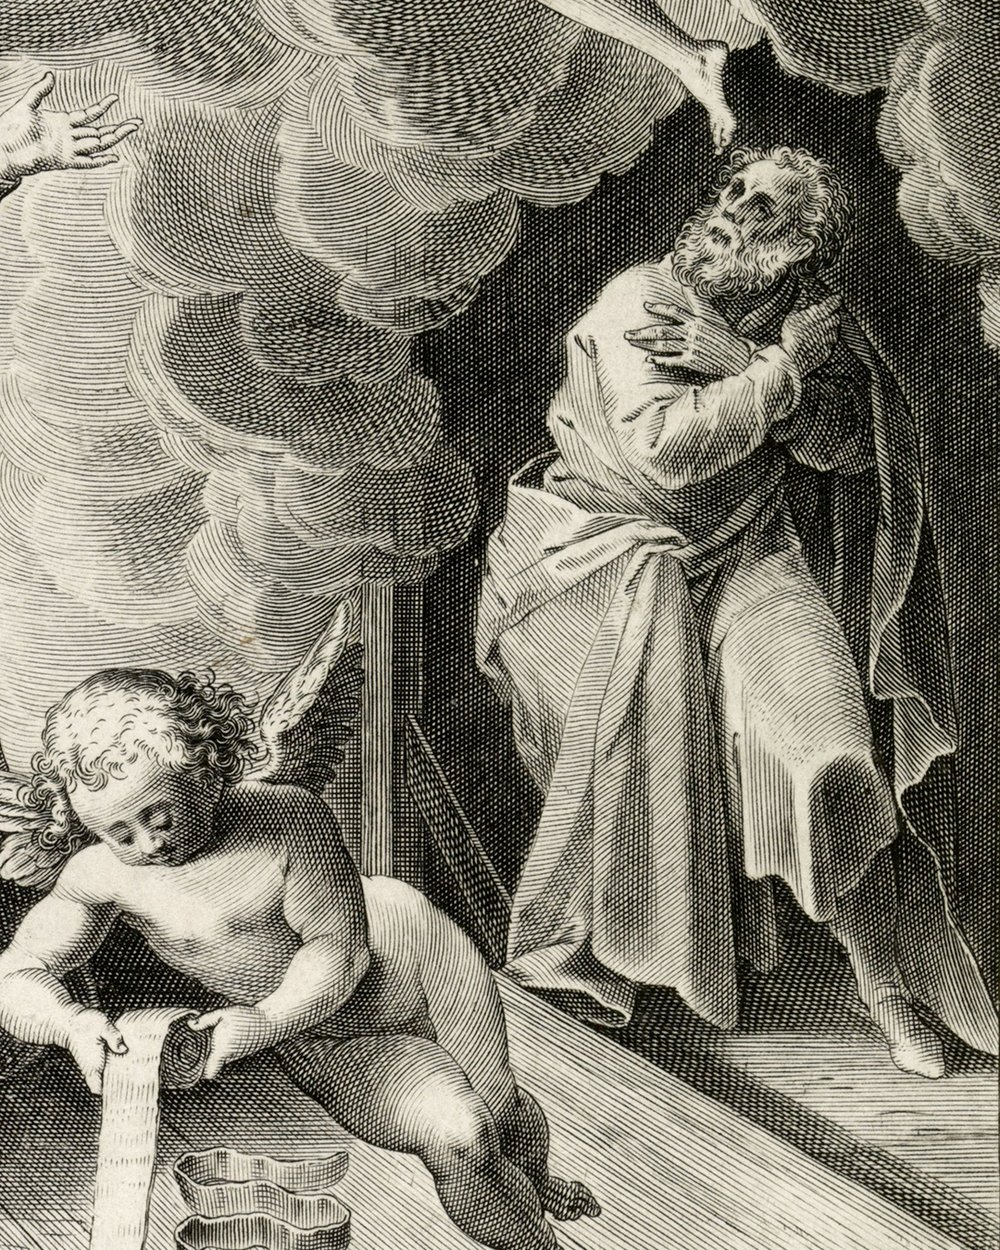 ''Birth of Christ'' (1572 - 1628)